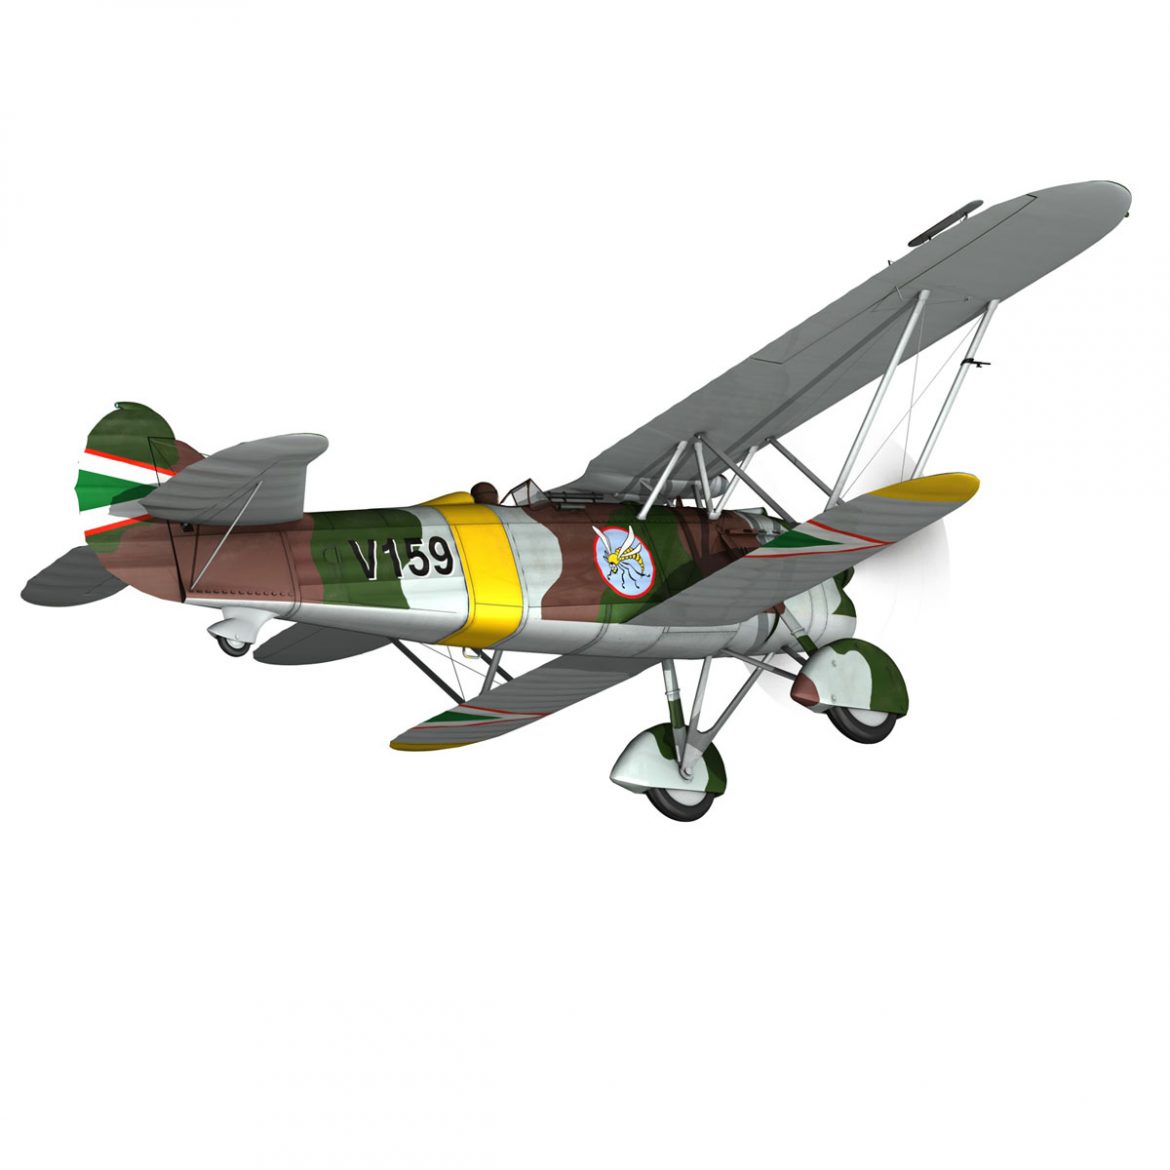 fiat cr.32 – hungarian royal air force – v159 3d model fbx c4d lwo obj 299965